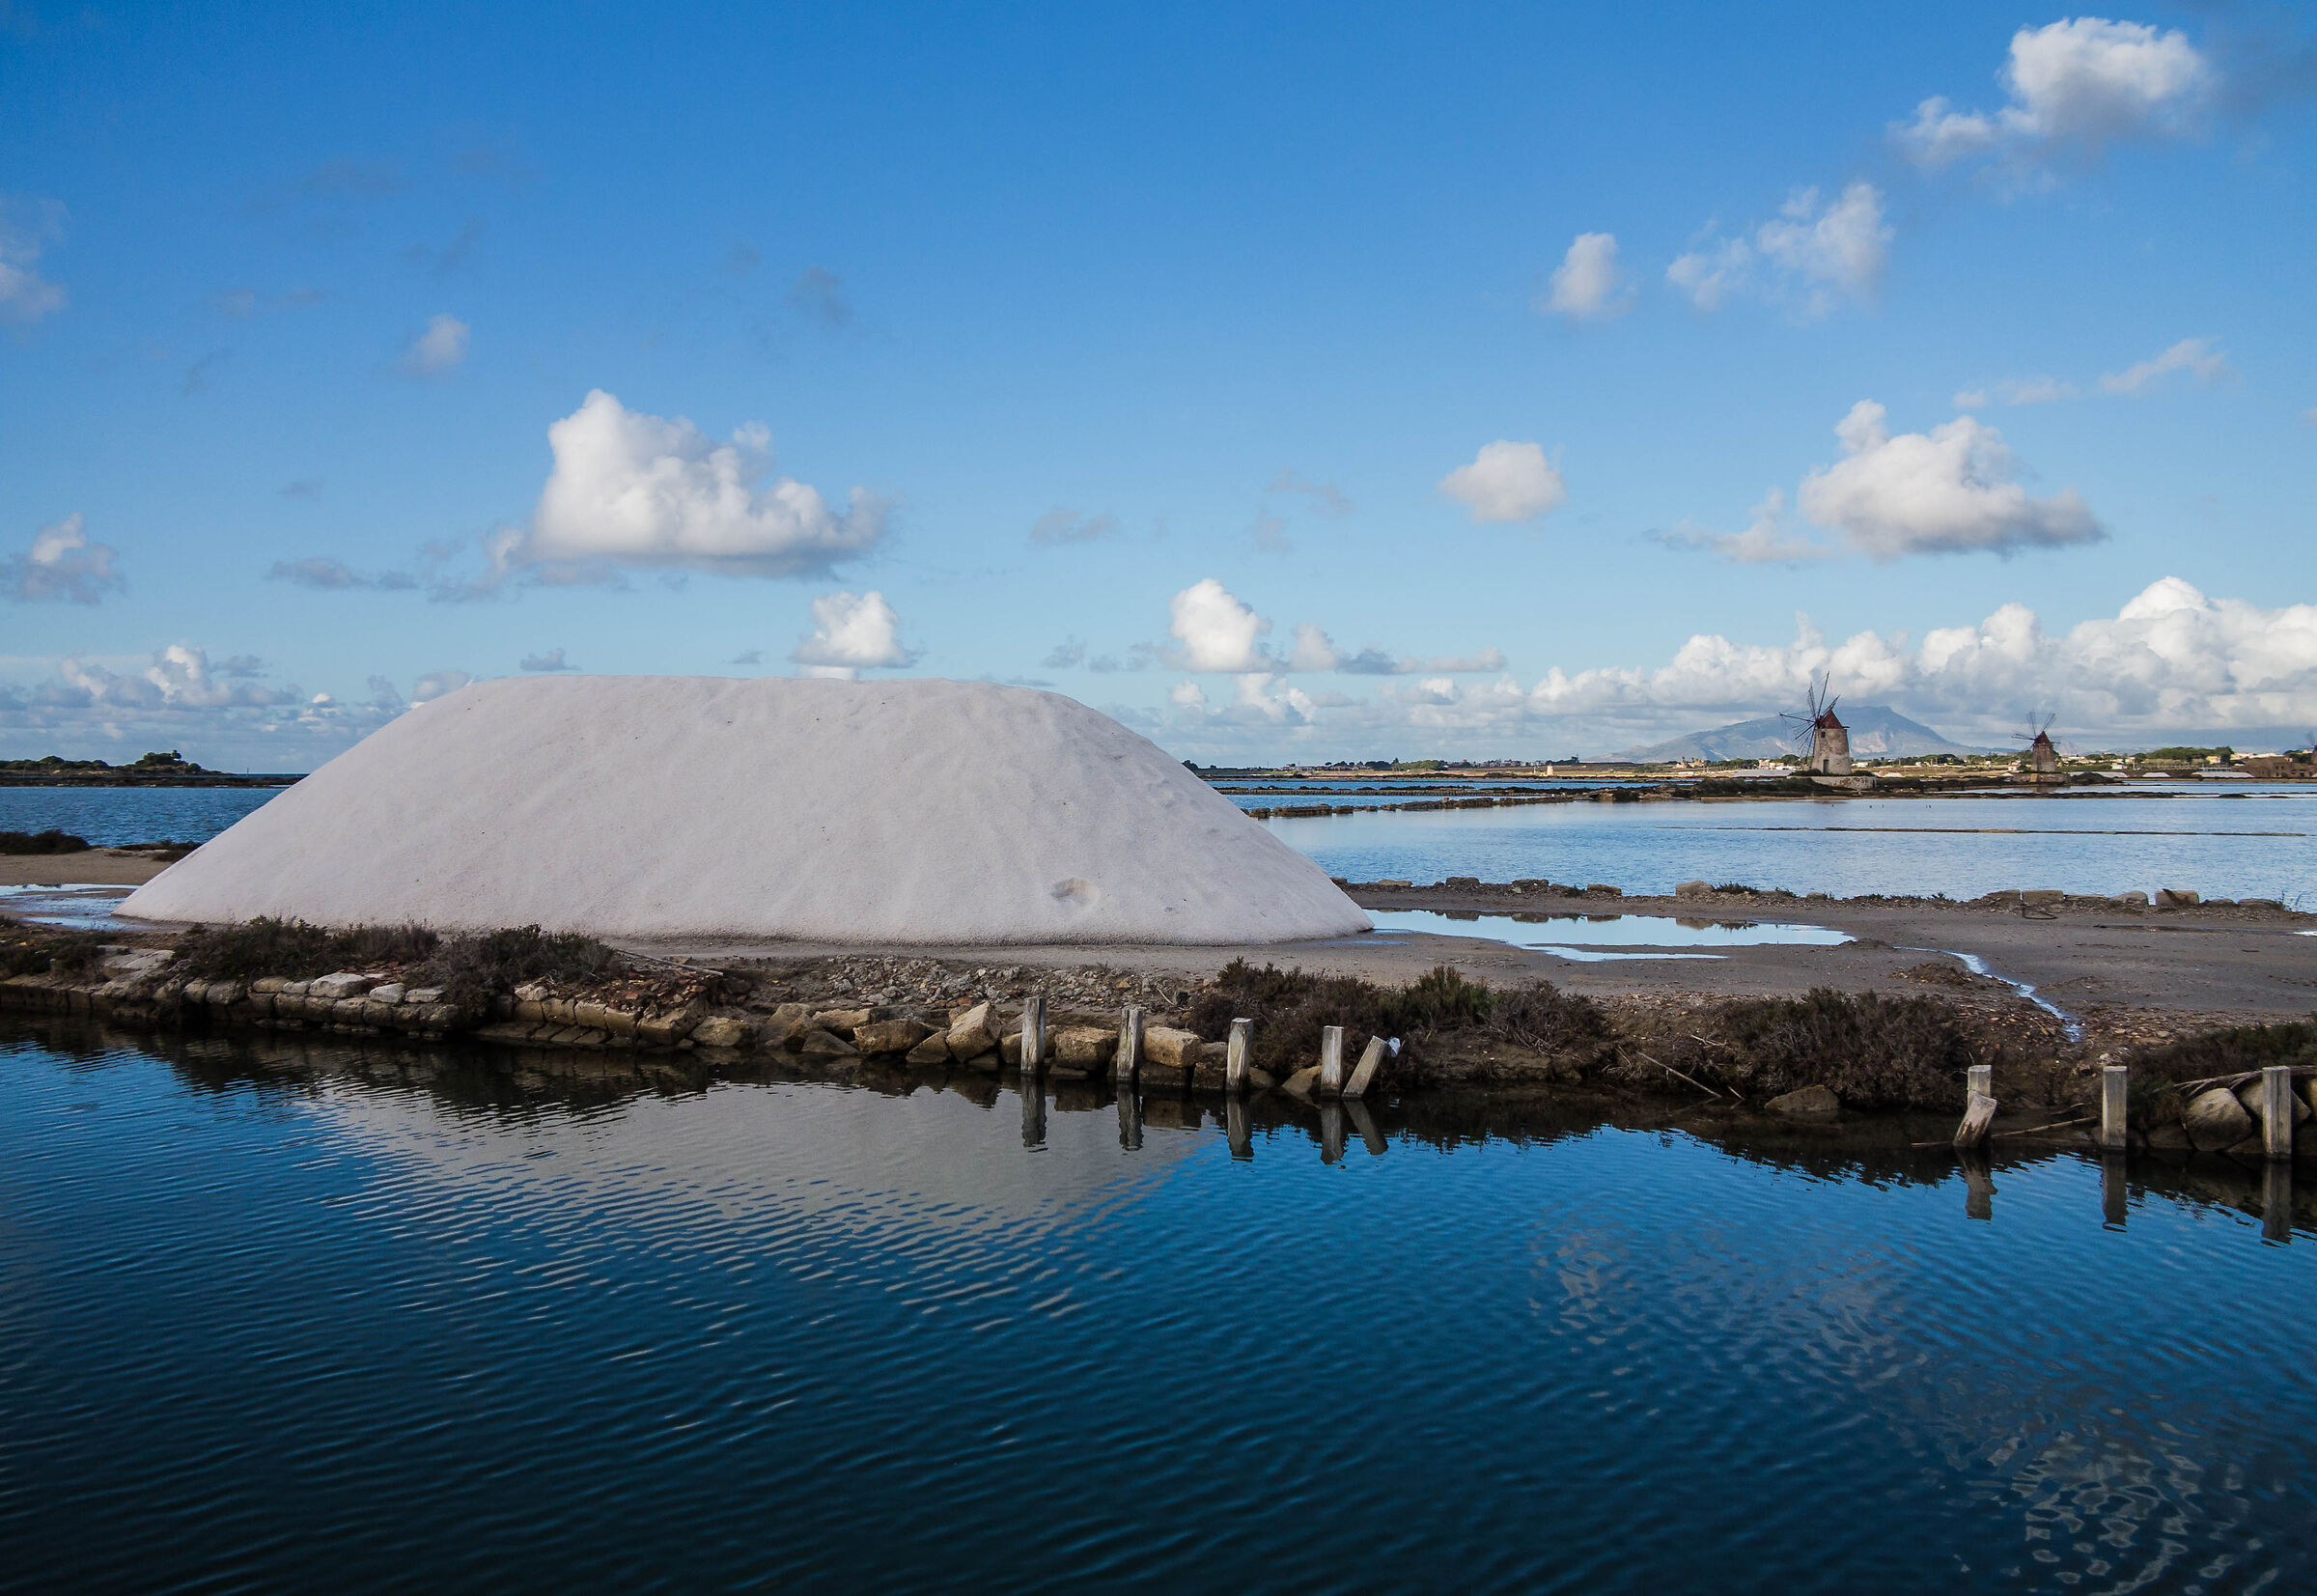 the salt mound...